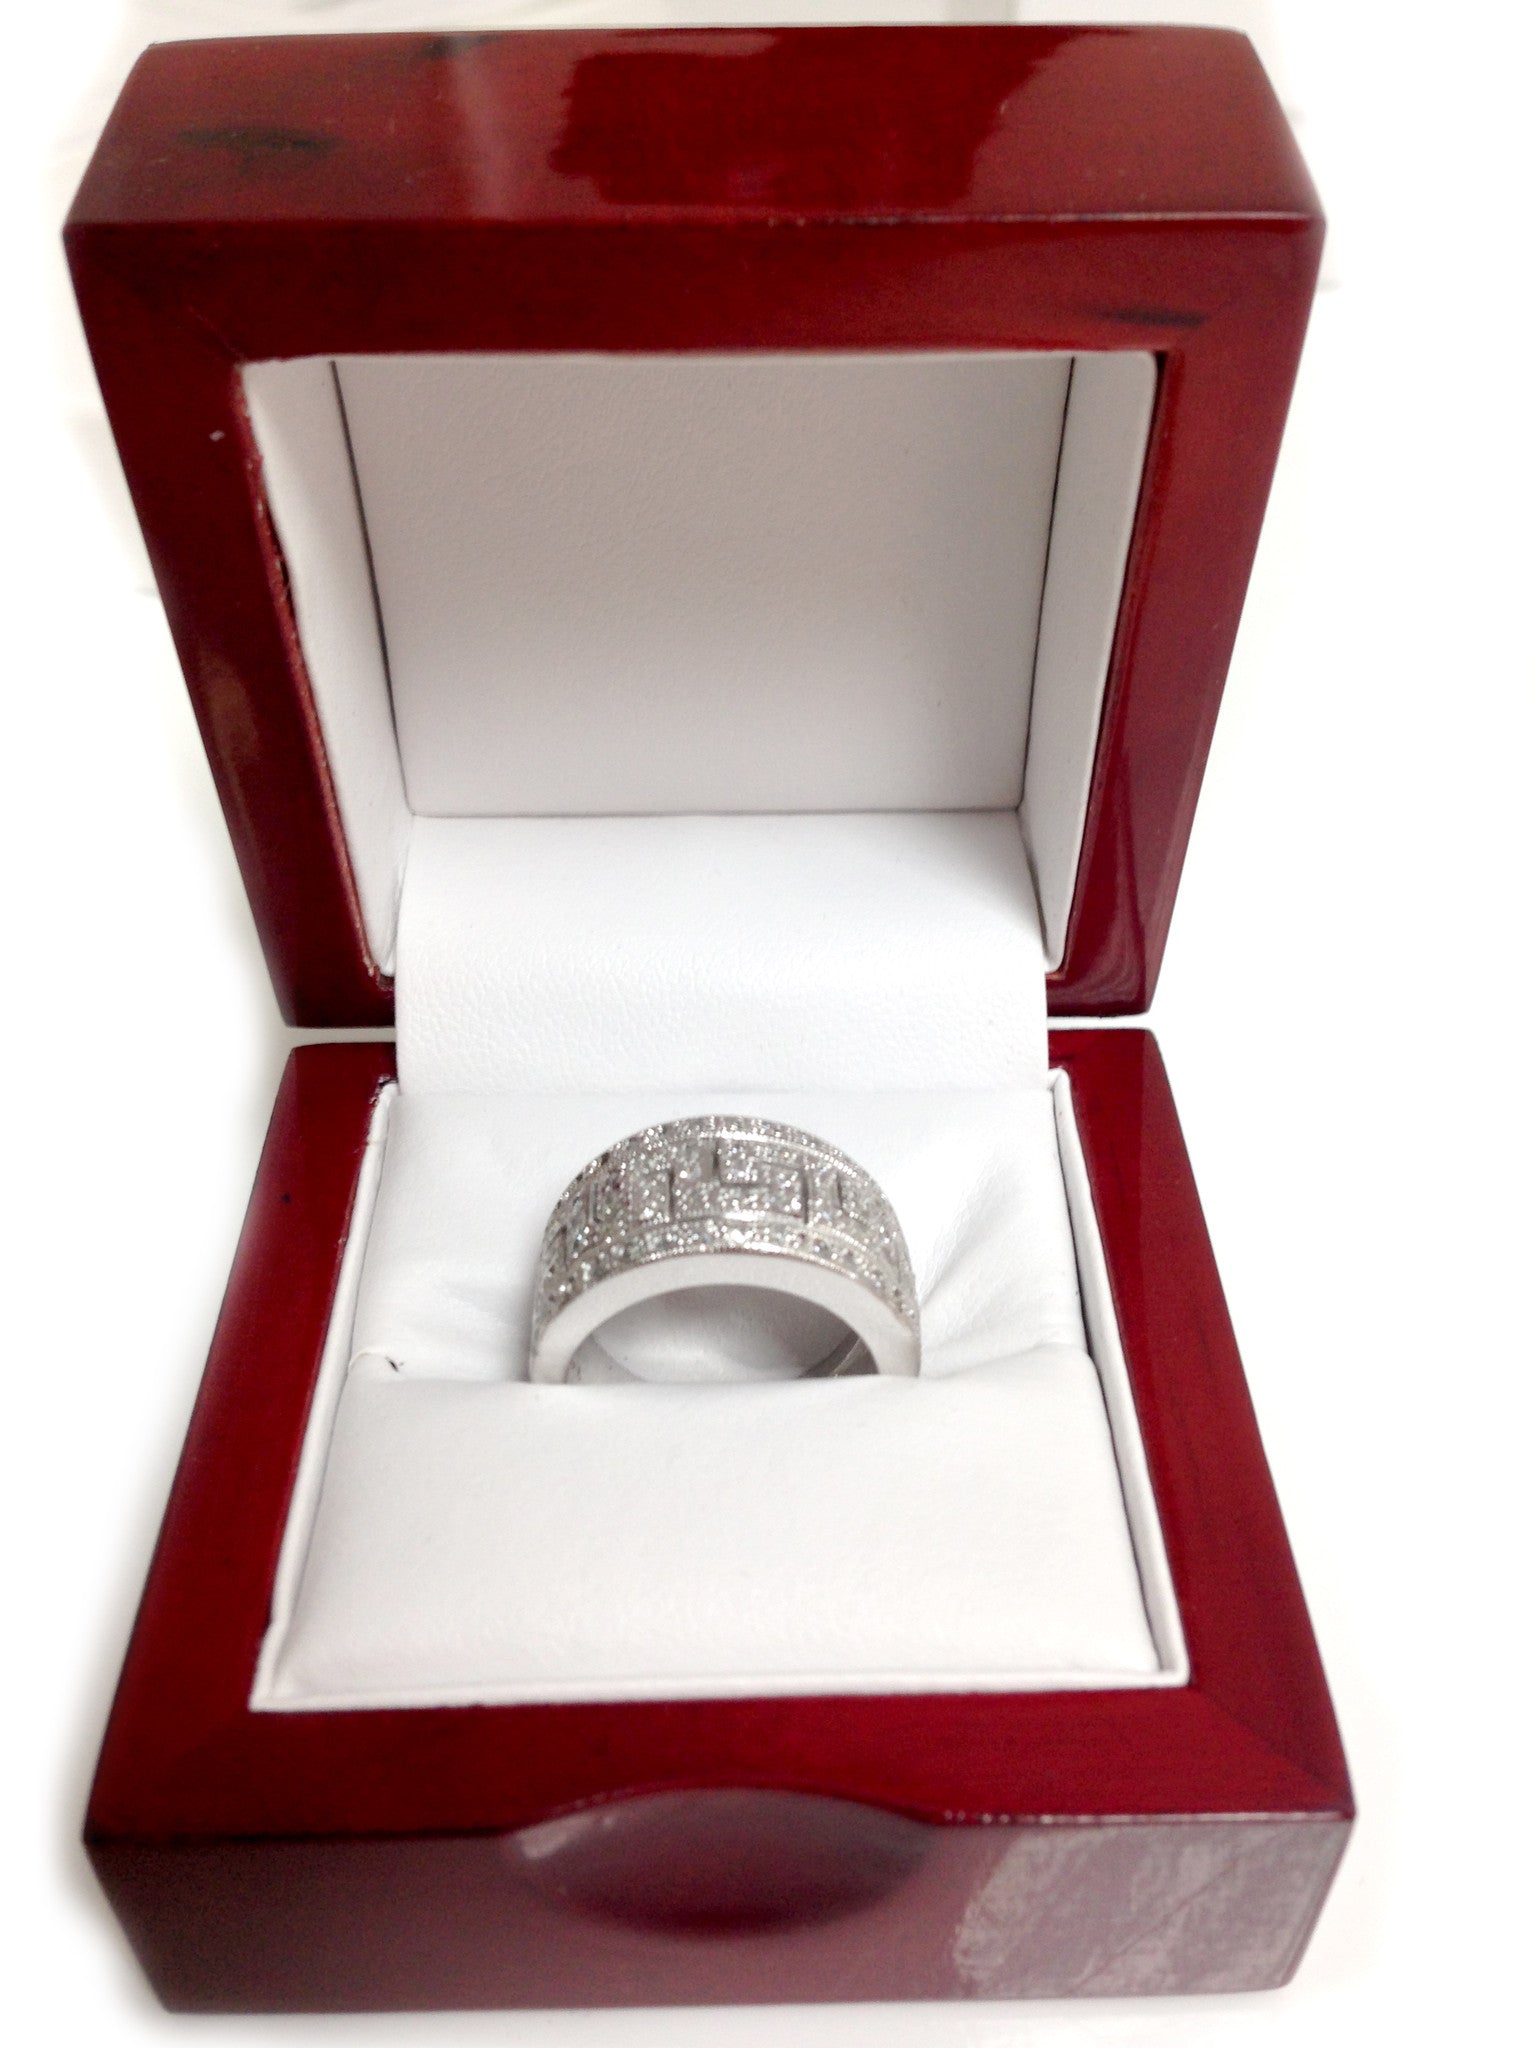 14K Gold Round Diamond Pave' Set Greek Key Ring, 0.74ctw fine designer jewelry for men and women